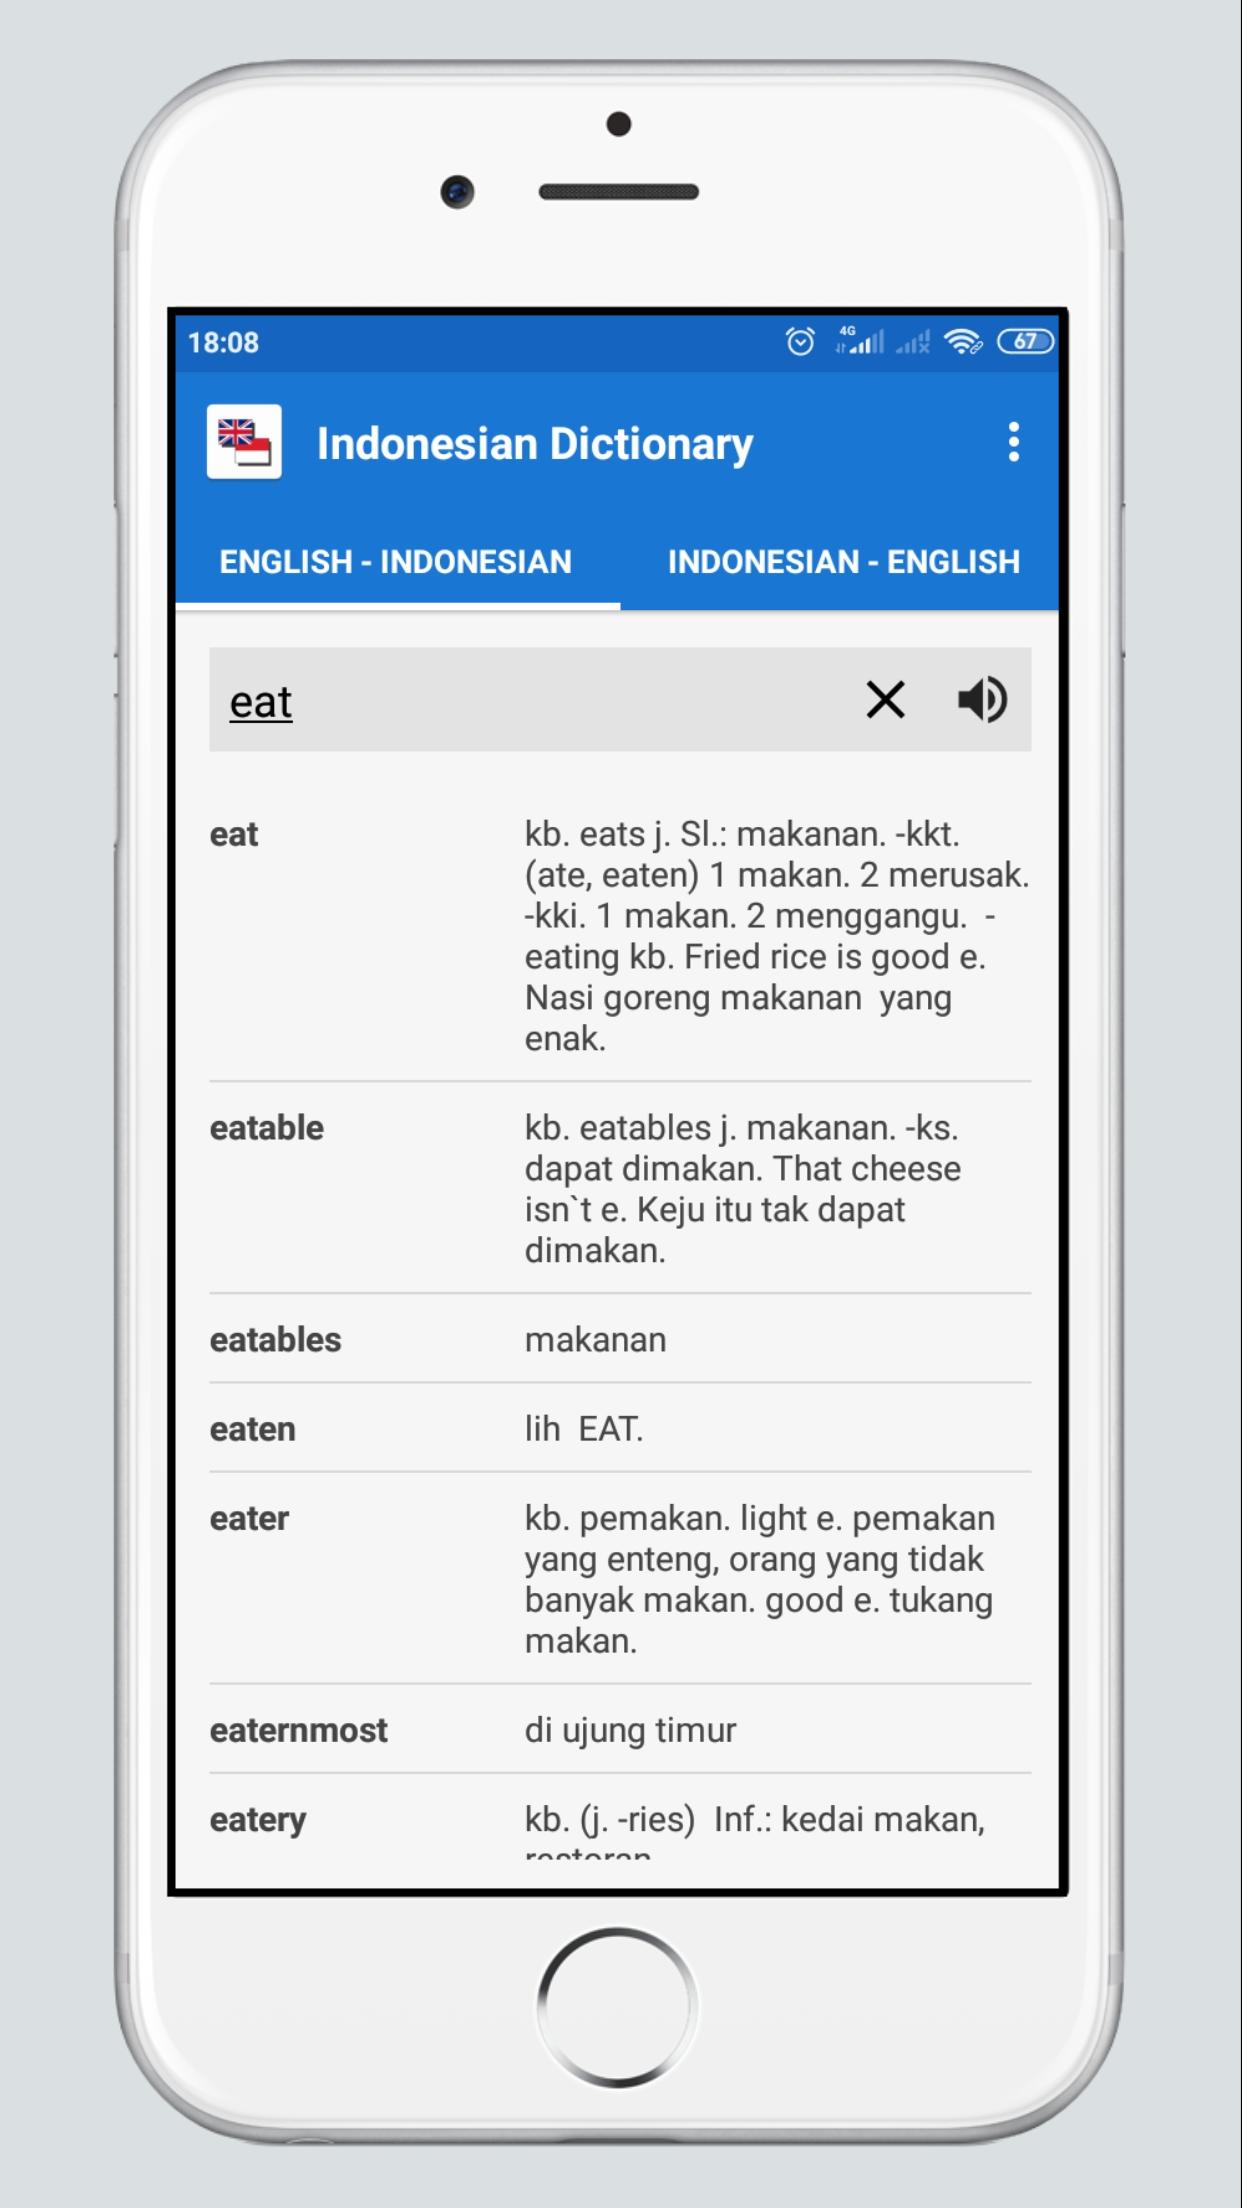 English - Indonesian Dictionary 1.0.2 Screenshot 2